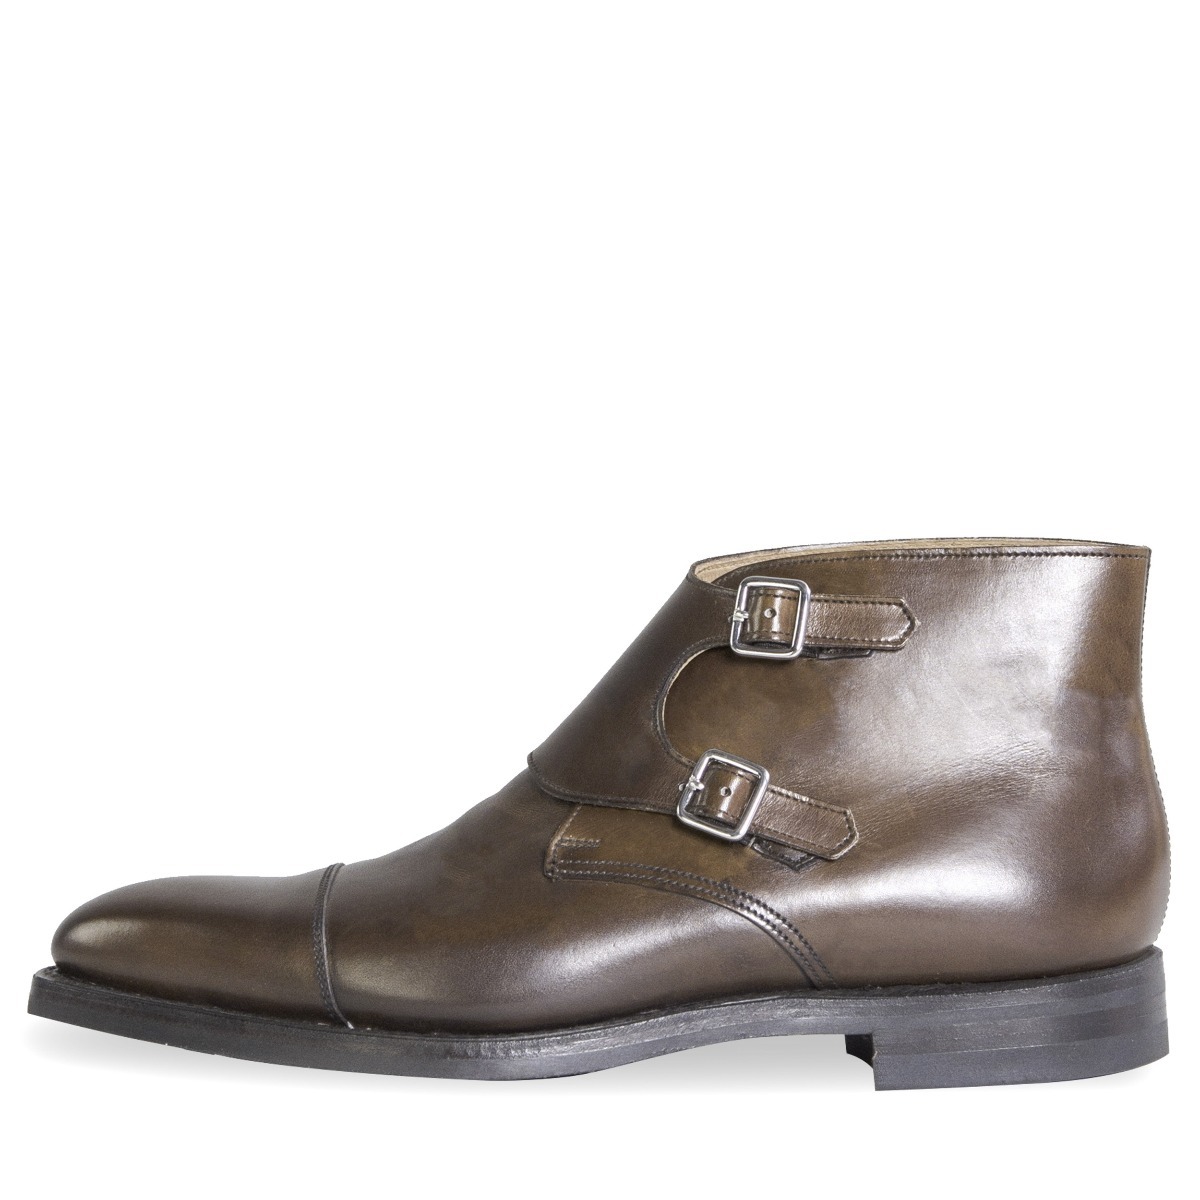 Crockett & Jones ’Camberley’ Burnished Calf Leather Boots Brown